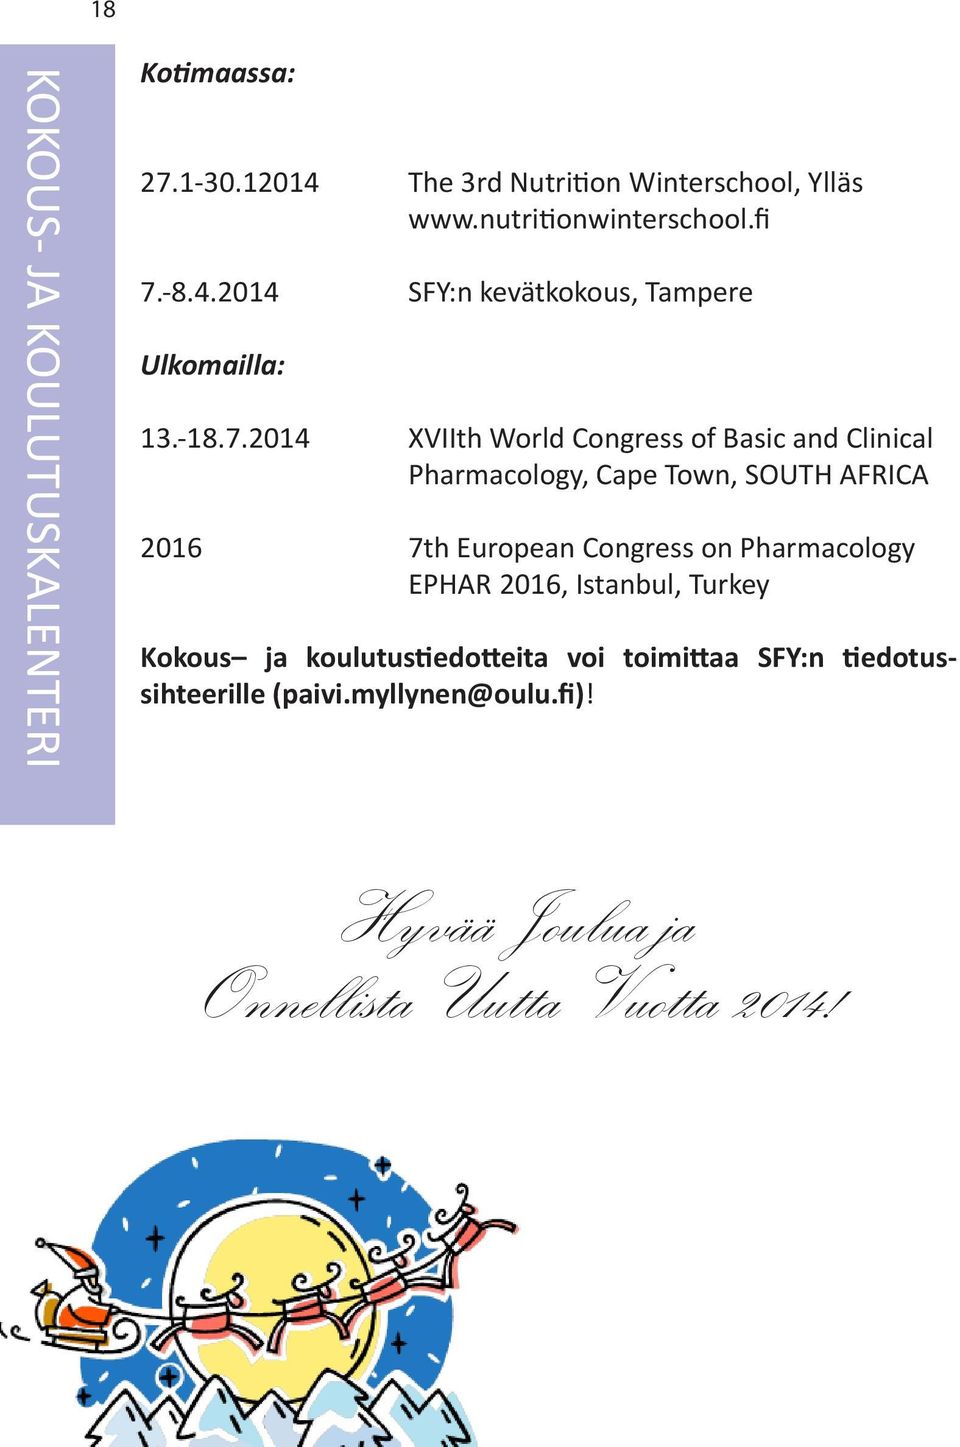 Pharmacology, Cape Town, SOUTH AFRICA 2016 7th European Congress on Pharmacology EPHAR 2016, Istanbul, Turkey Kokous ja